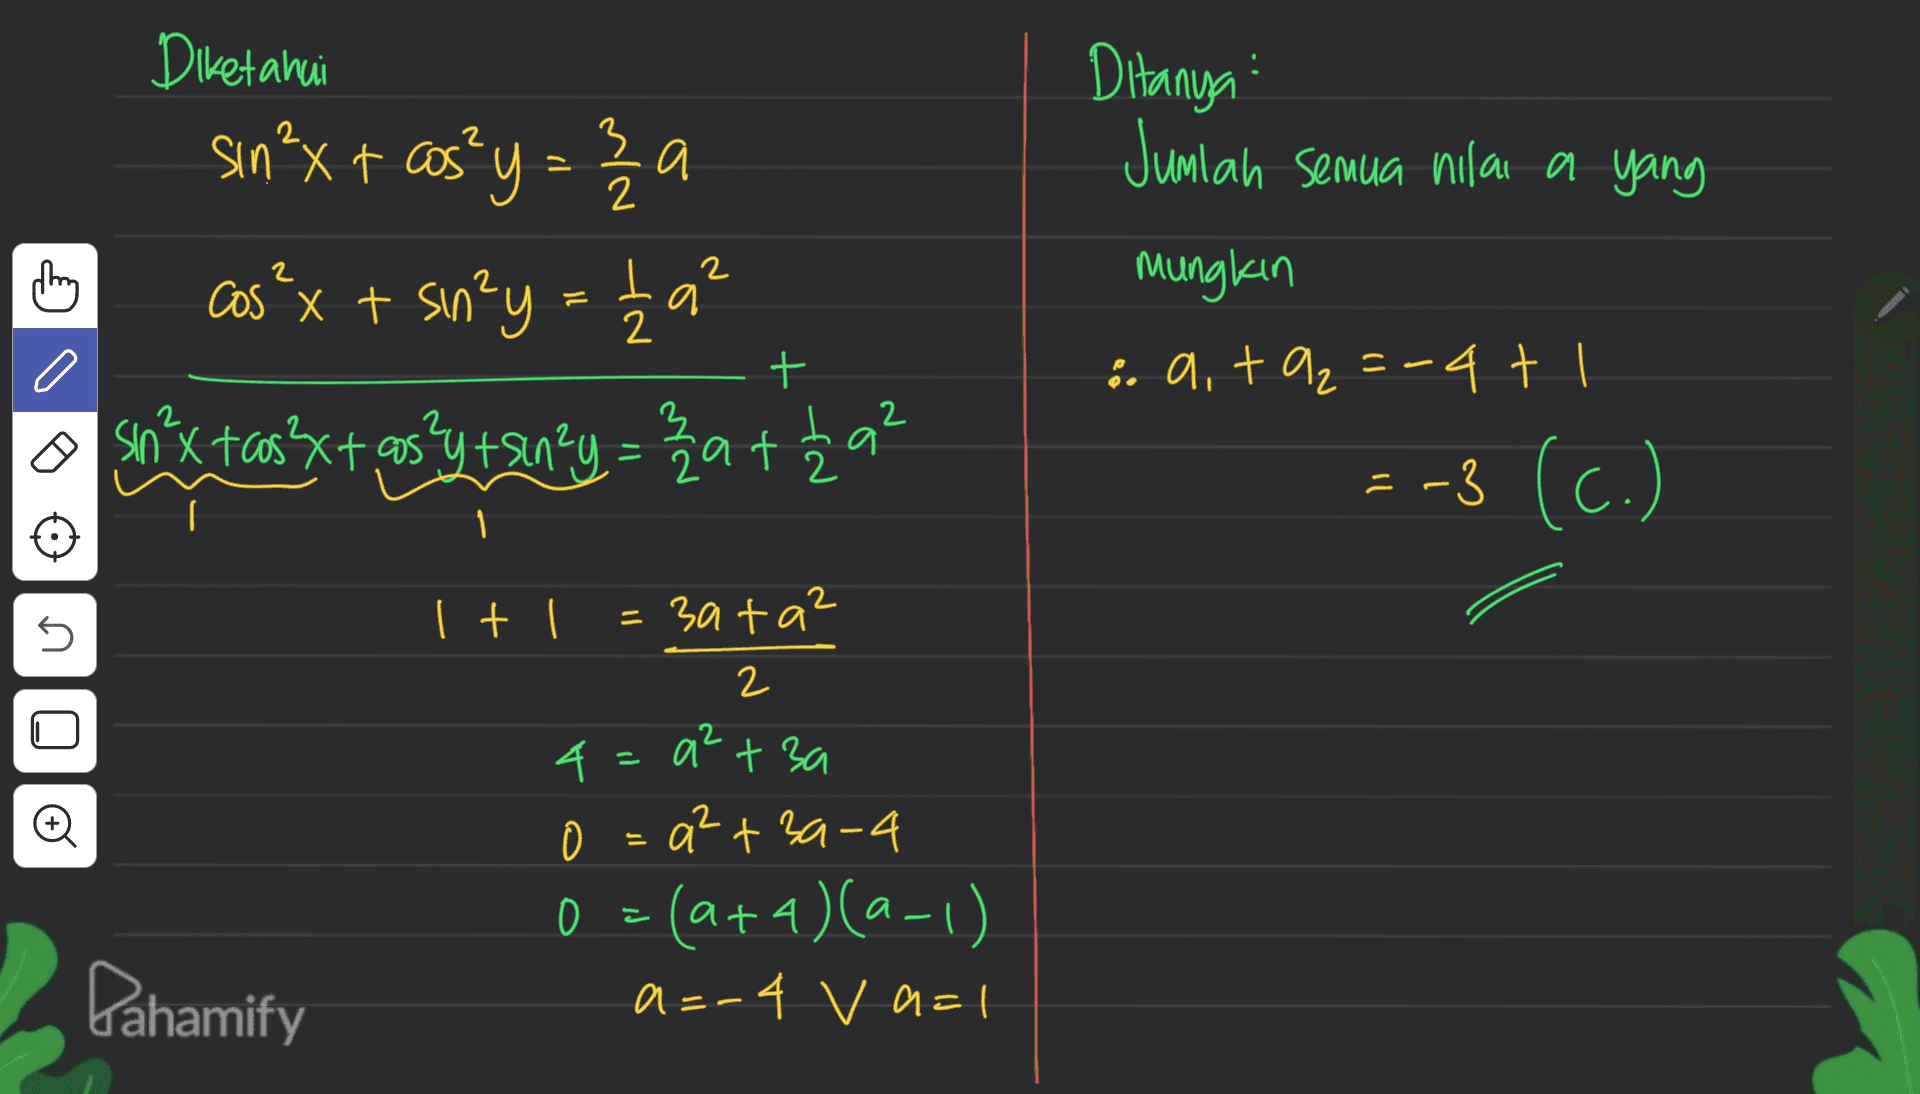 Ditanya Jumlah semua nilai a yang Й a Diketahui sin ²x + cos² y = 32 cos²x + sin²y = 129² o sin²x+cos3x+,05Y+siny = 3a +24² thing + mungkin :. a,ta₂=-4 tl = -3 (c.) NE I + 1 = 3ata? U 2 n o = 4. =a² + 3a 0 a²+3a-4 0 =(a+4) (a-1) a=-4 v a=1 Pahamify 